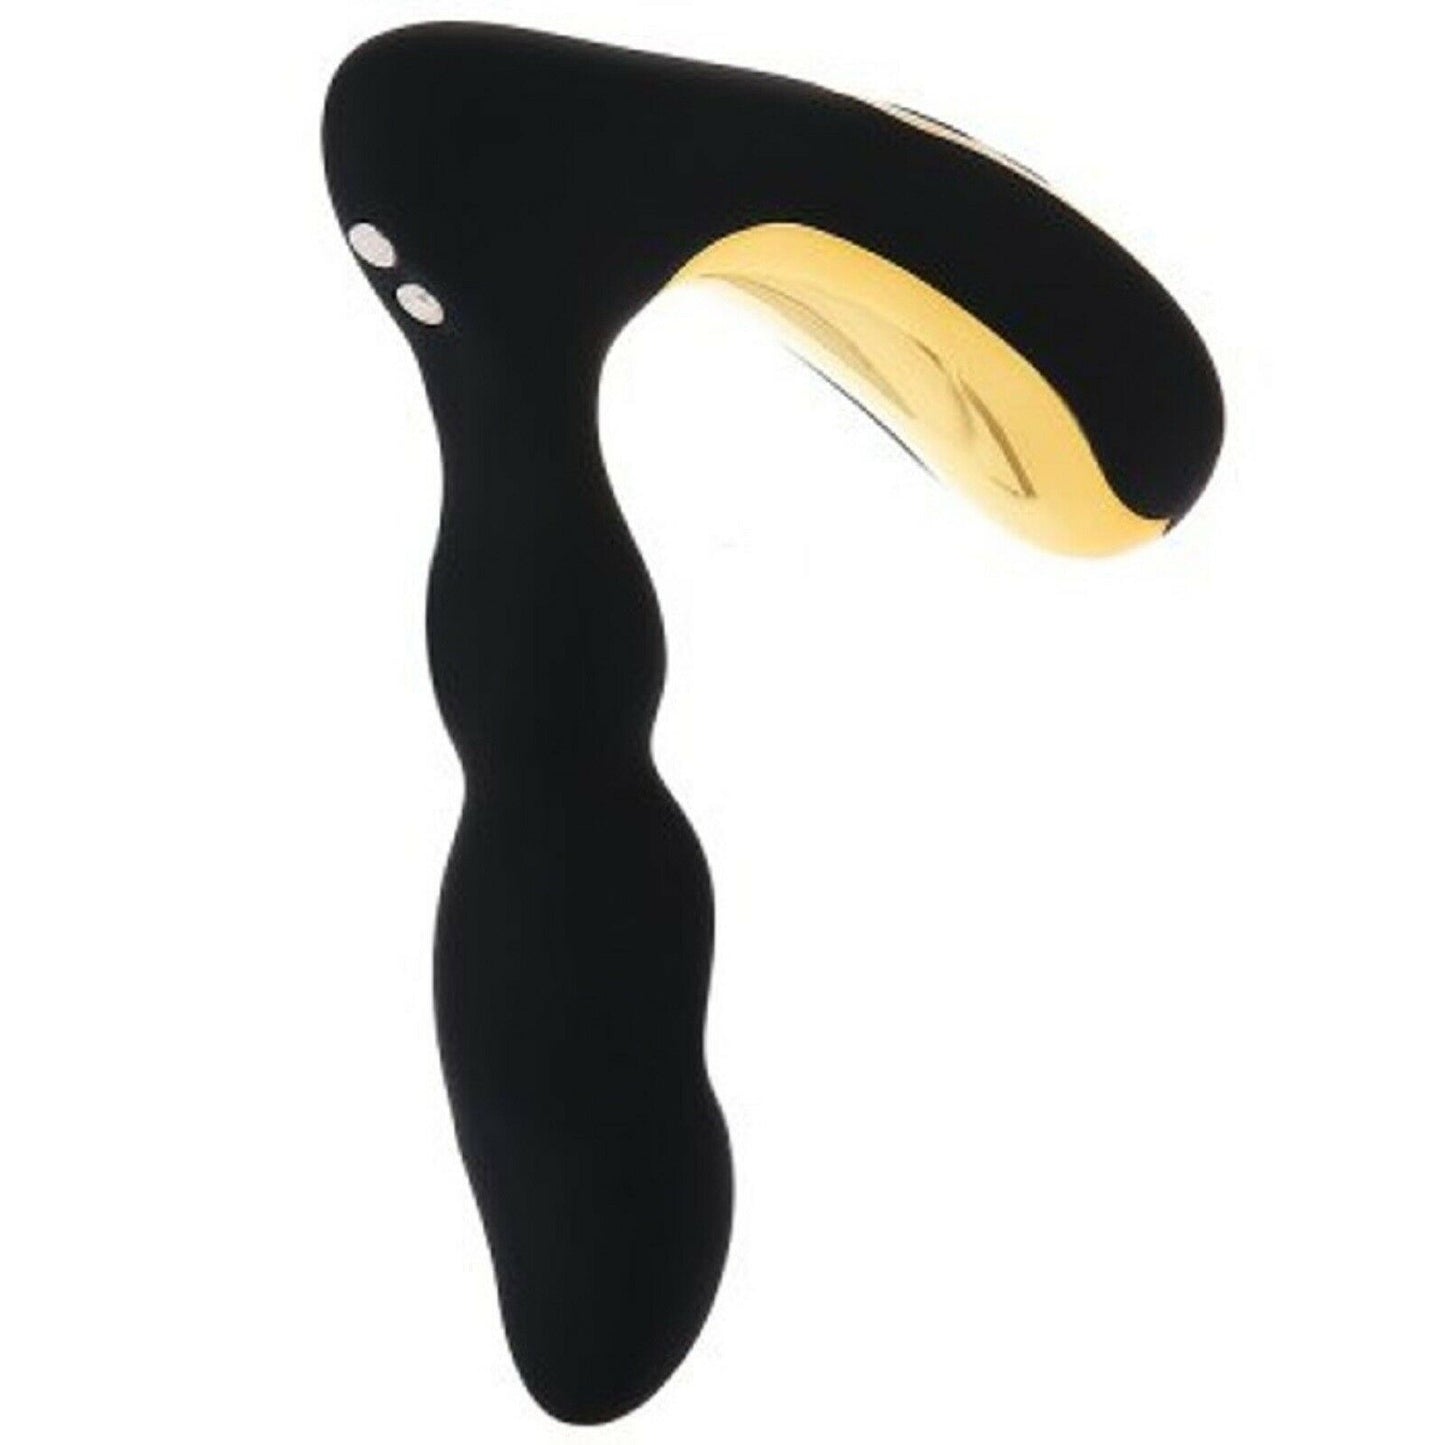 NV Toys Anal Plug Prostate Massager Vibrator Men Butt USB Male Adult Sex Toy